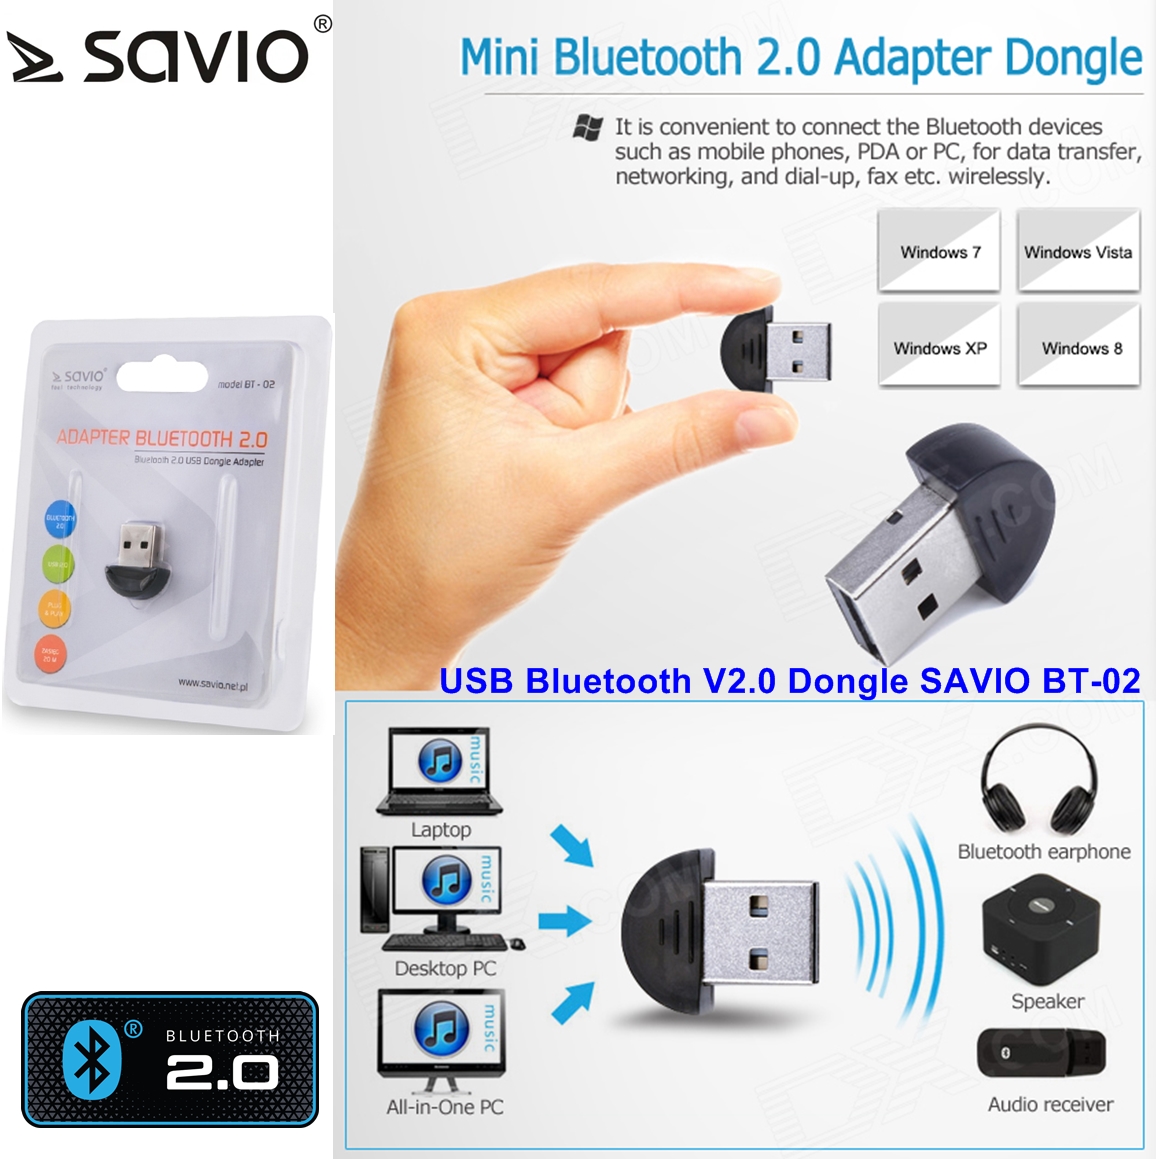 USB Bluetooth V2.0 Dongle SAVIO BT-02